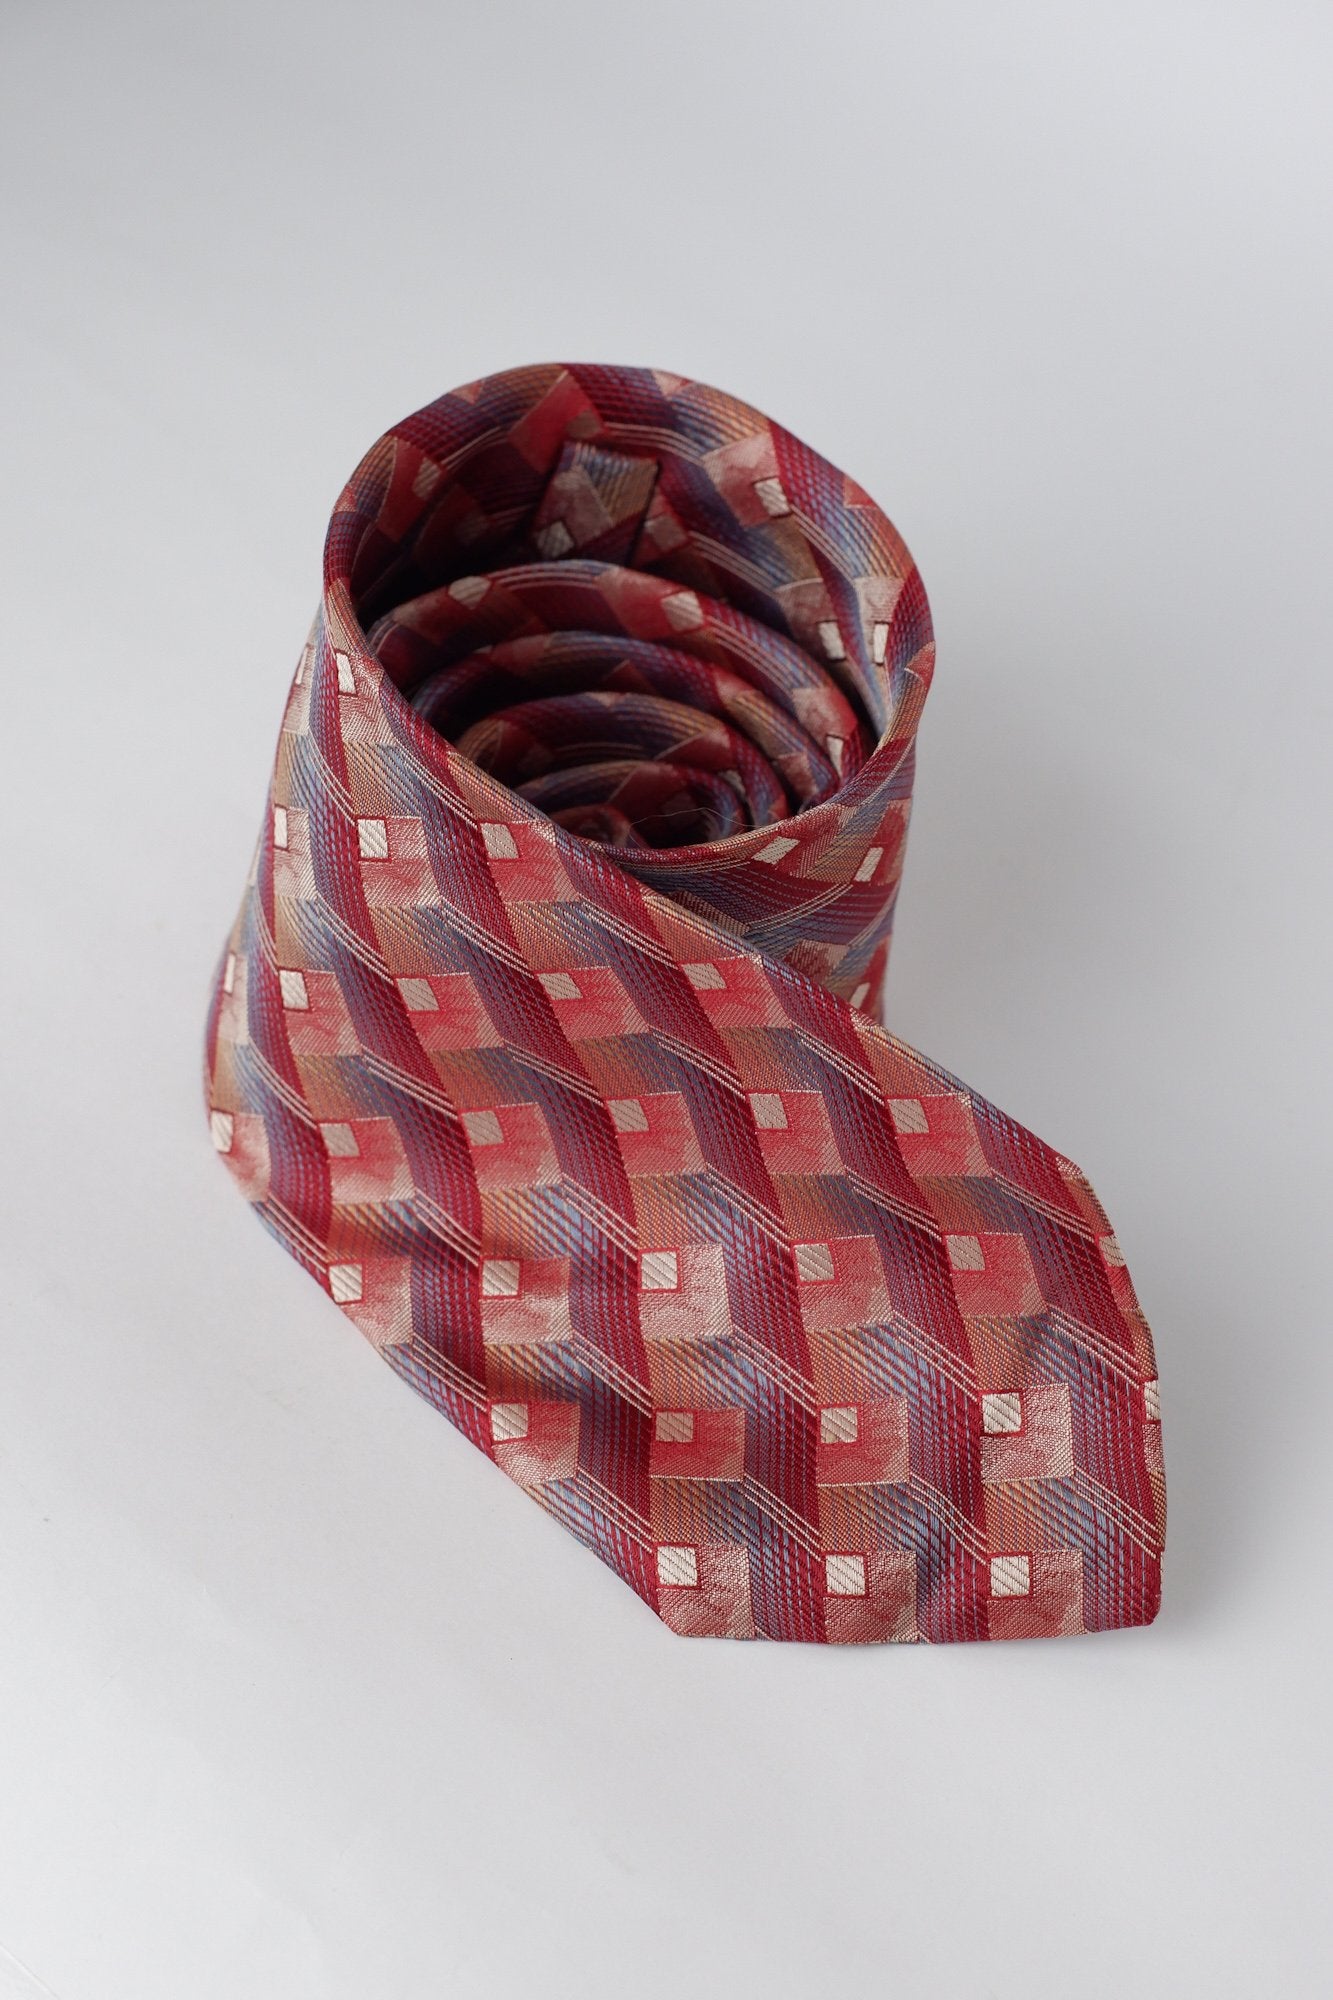 P. Fumagalli Red Geometric Necktie